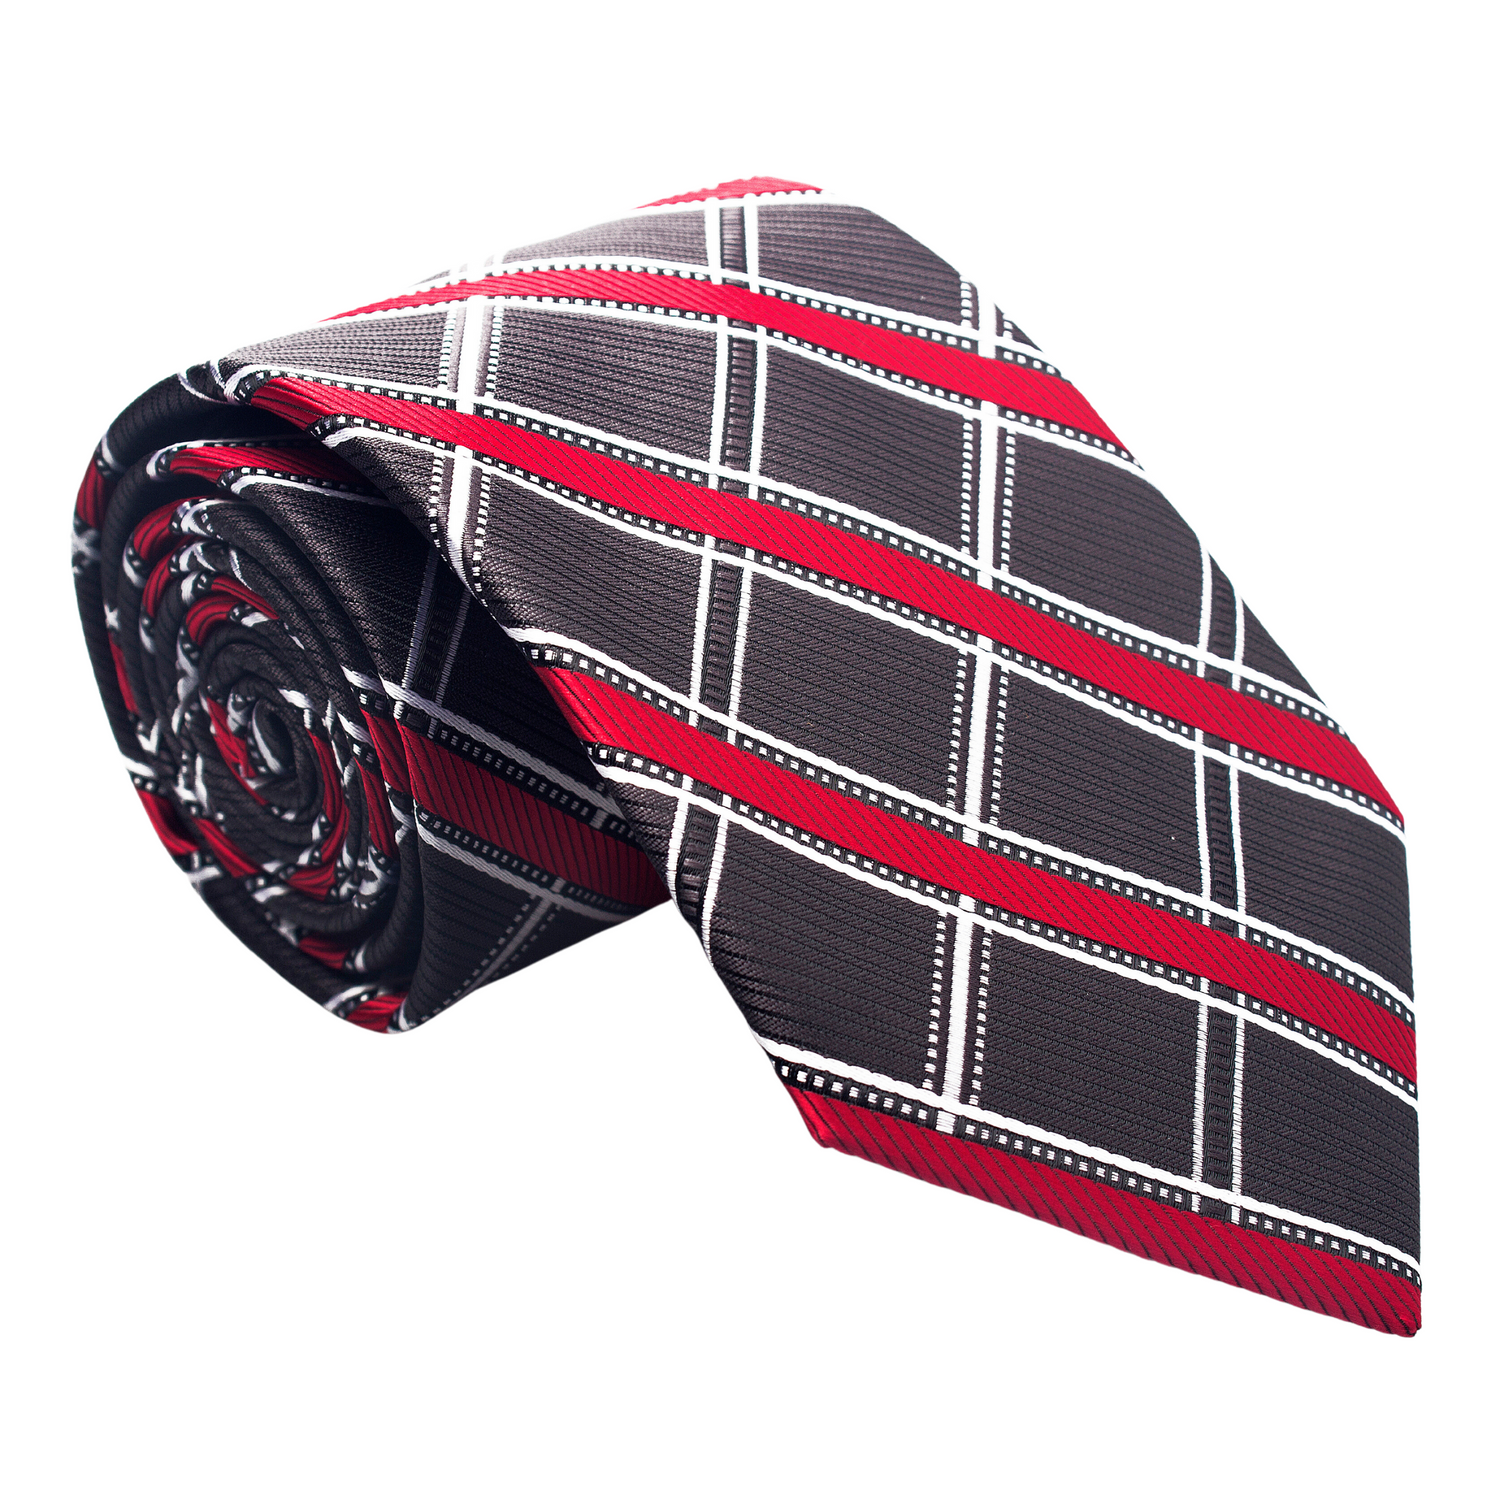 Alt View: Greyish Brown, Red, White Plaid Tie 